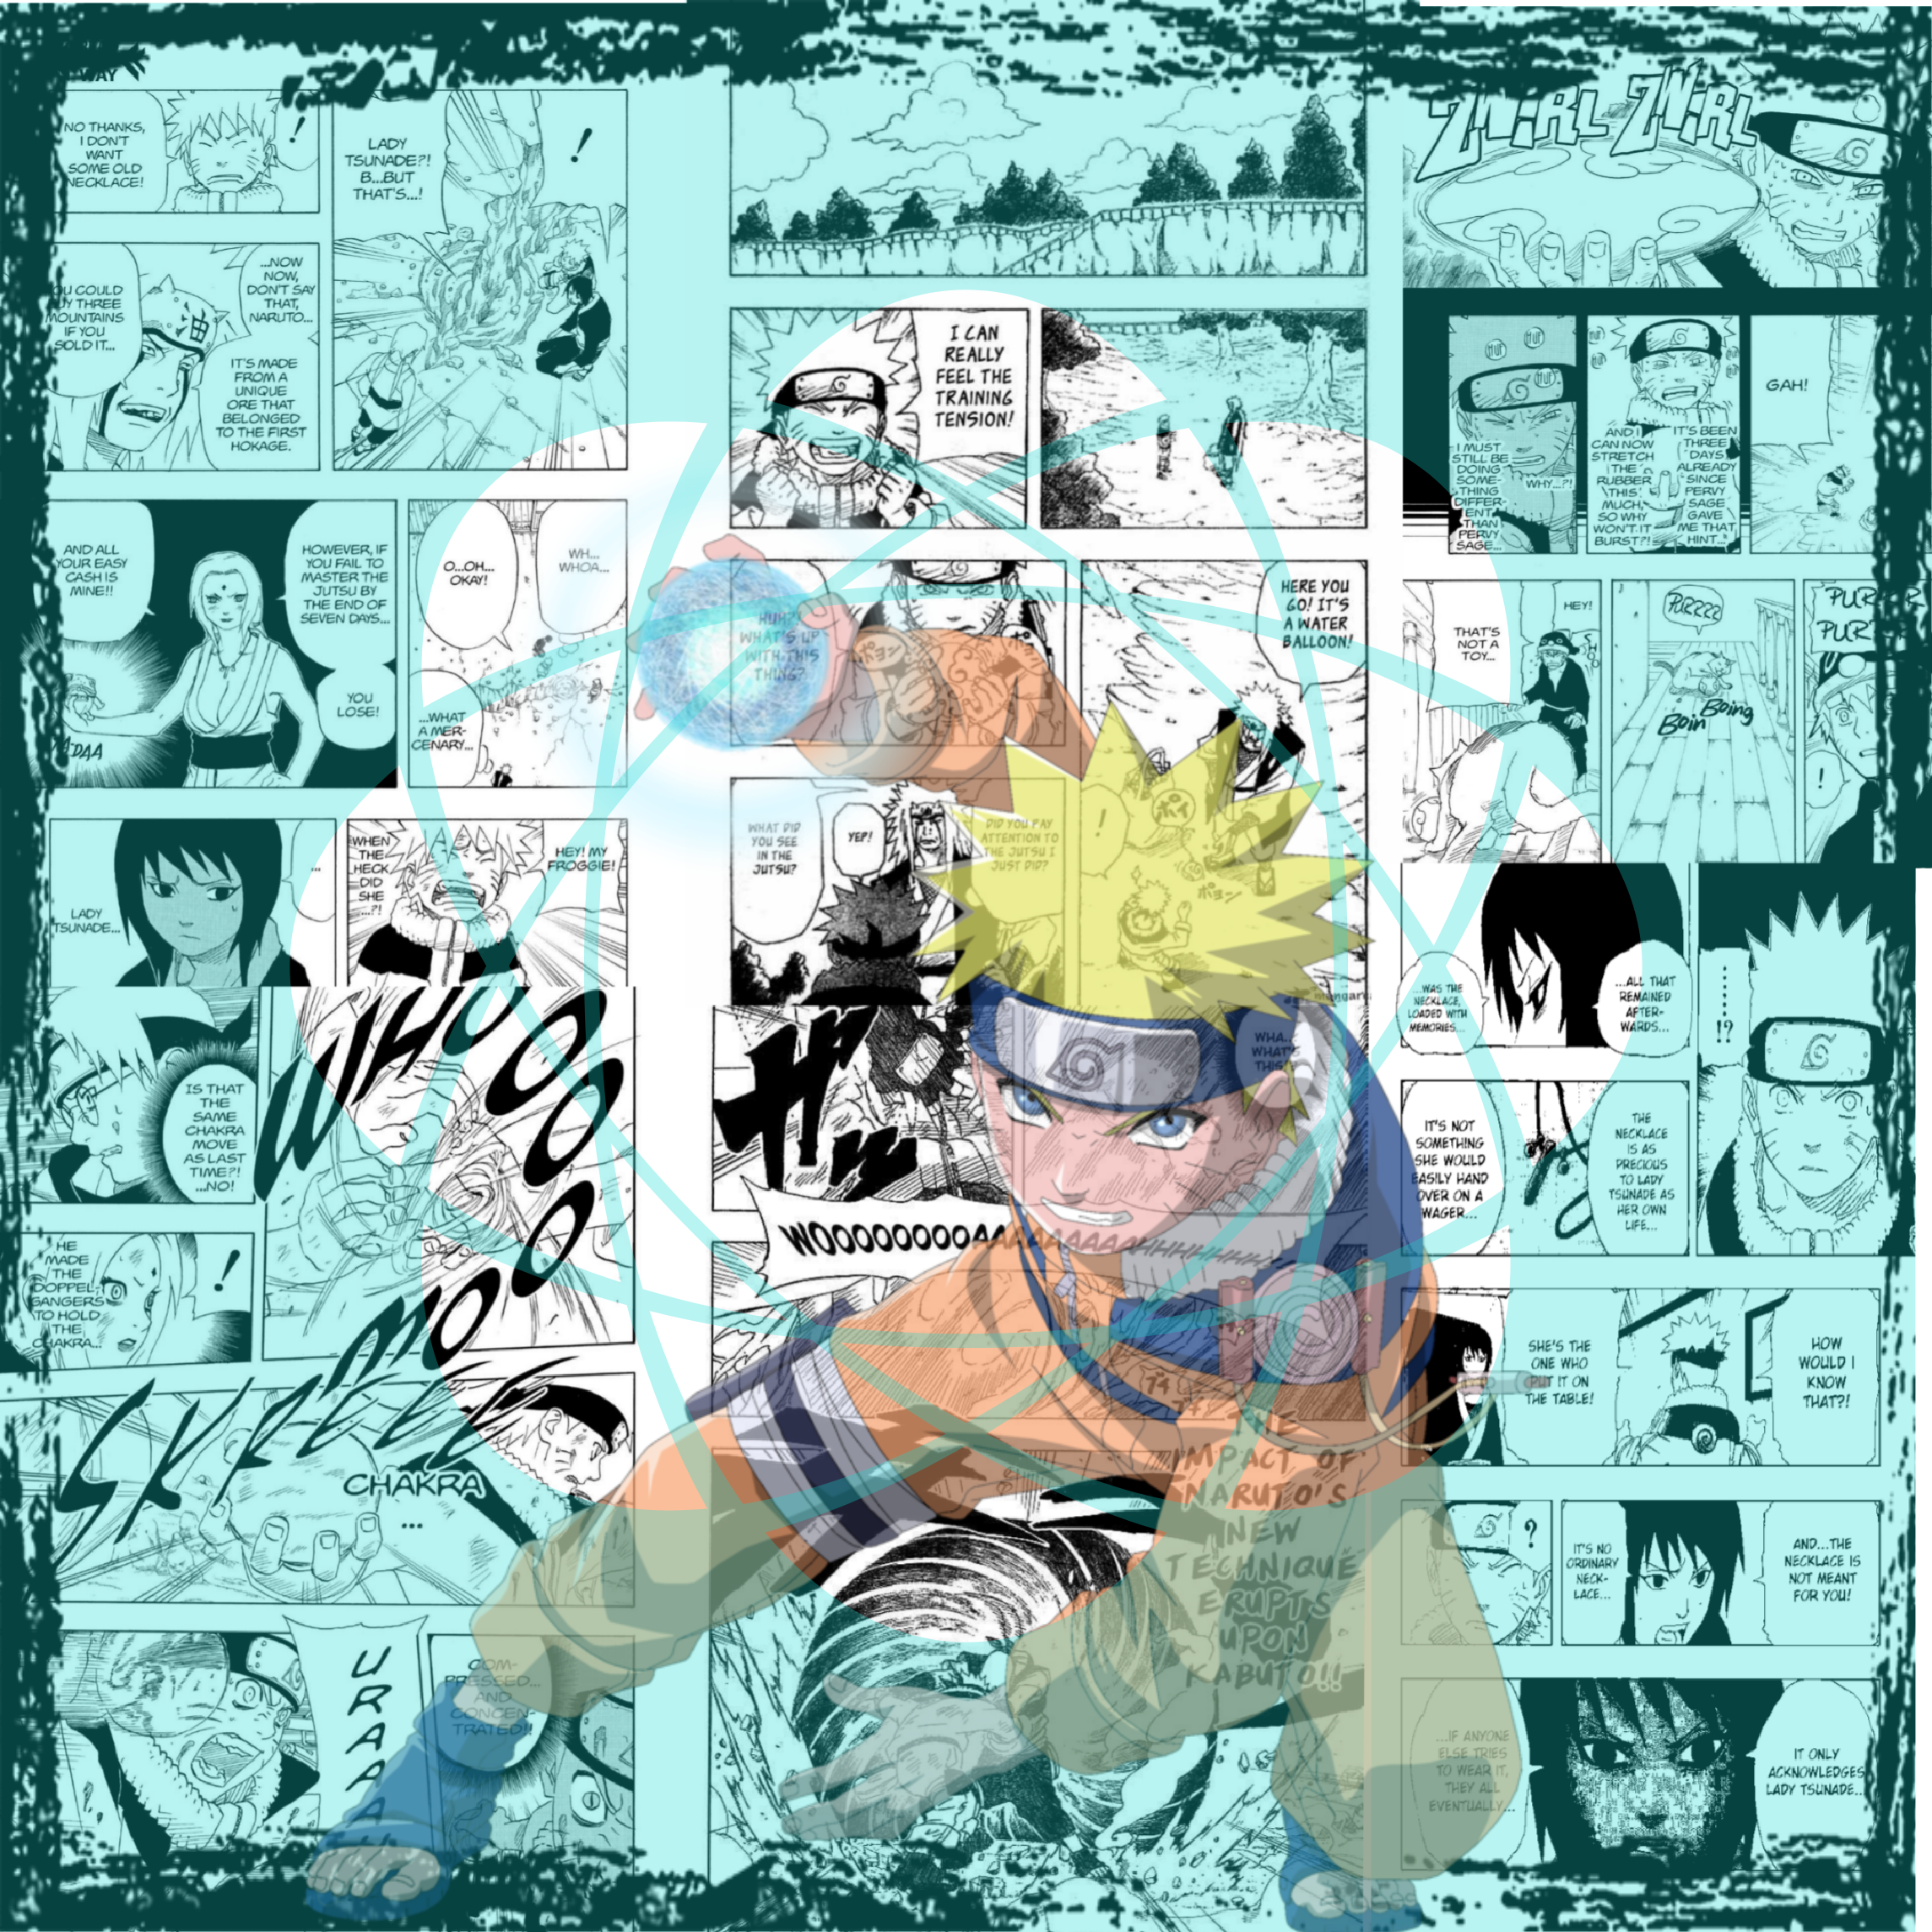 Naruto Rasengan Wallpaper I Made. Comment down below who I should